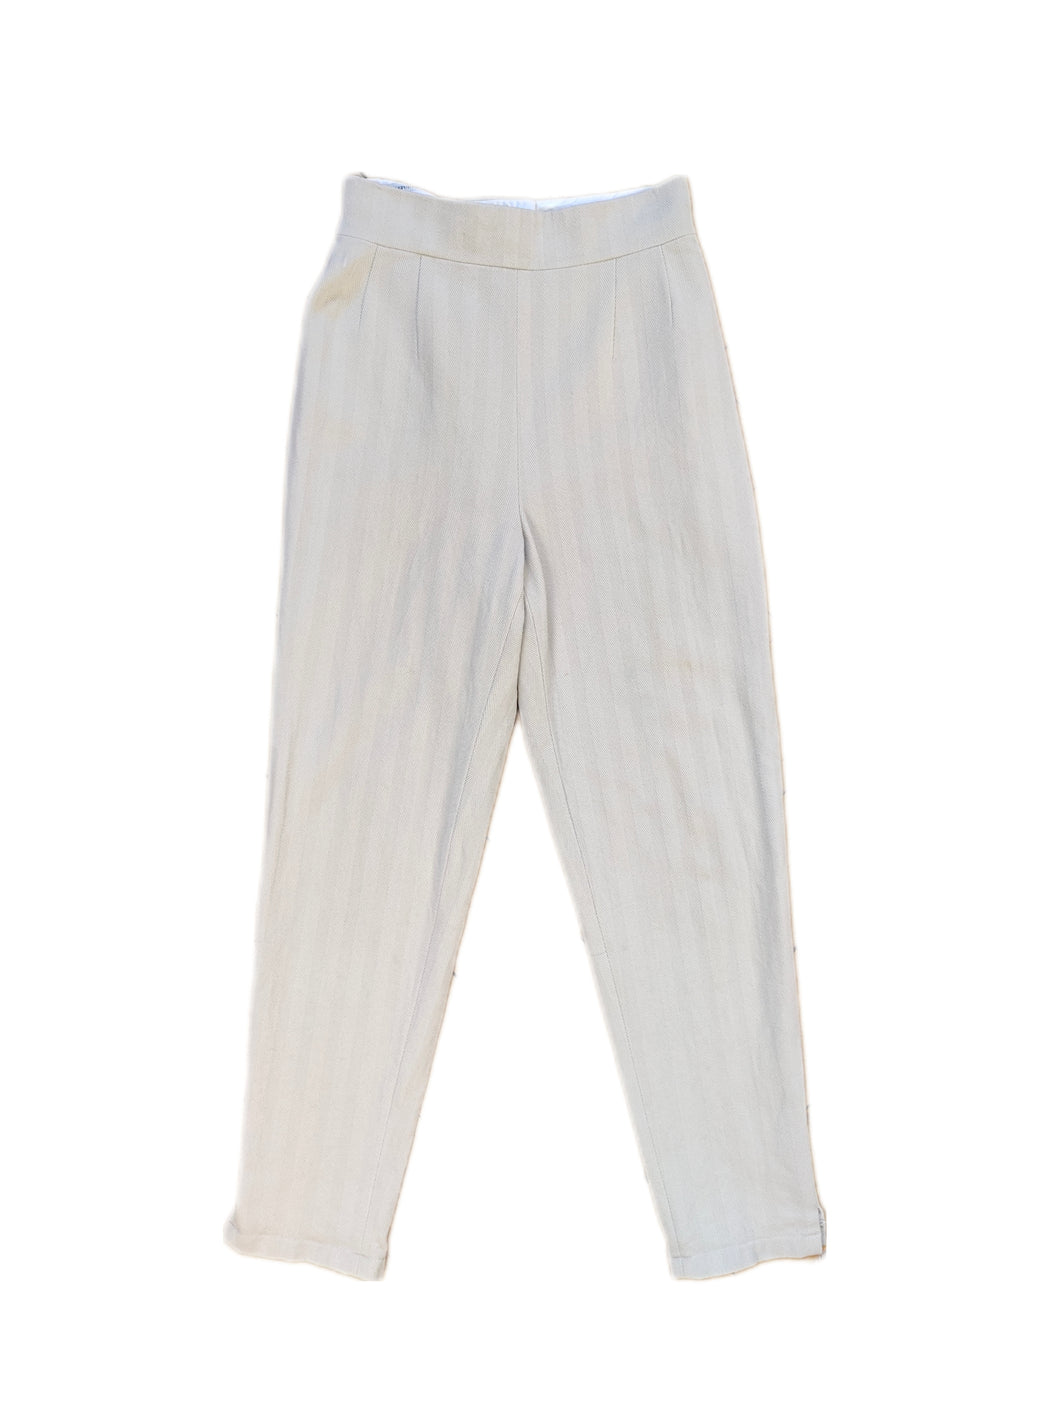 Vintage Sportmax by Max Mara wool trouser pants white cream beige stripe pattern designer women DE36 XS-S